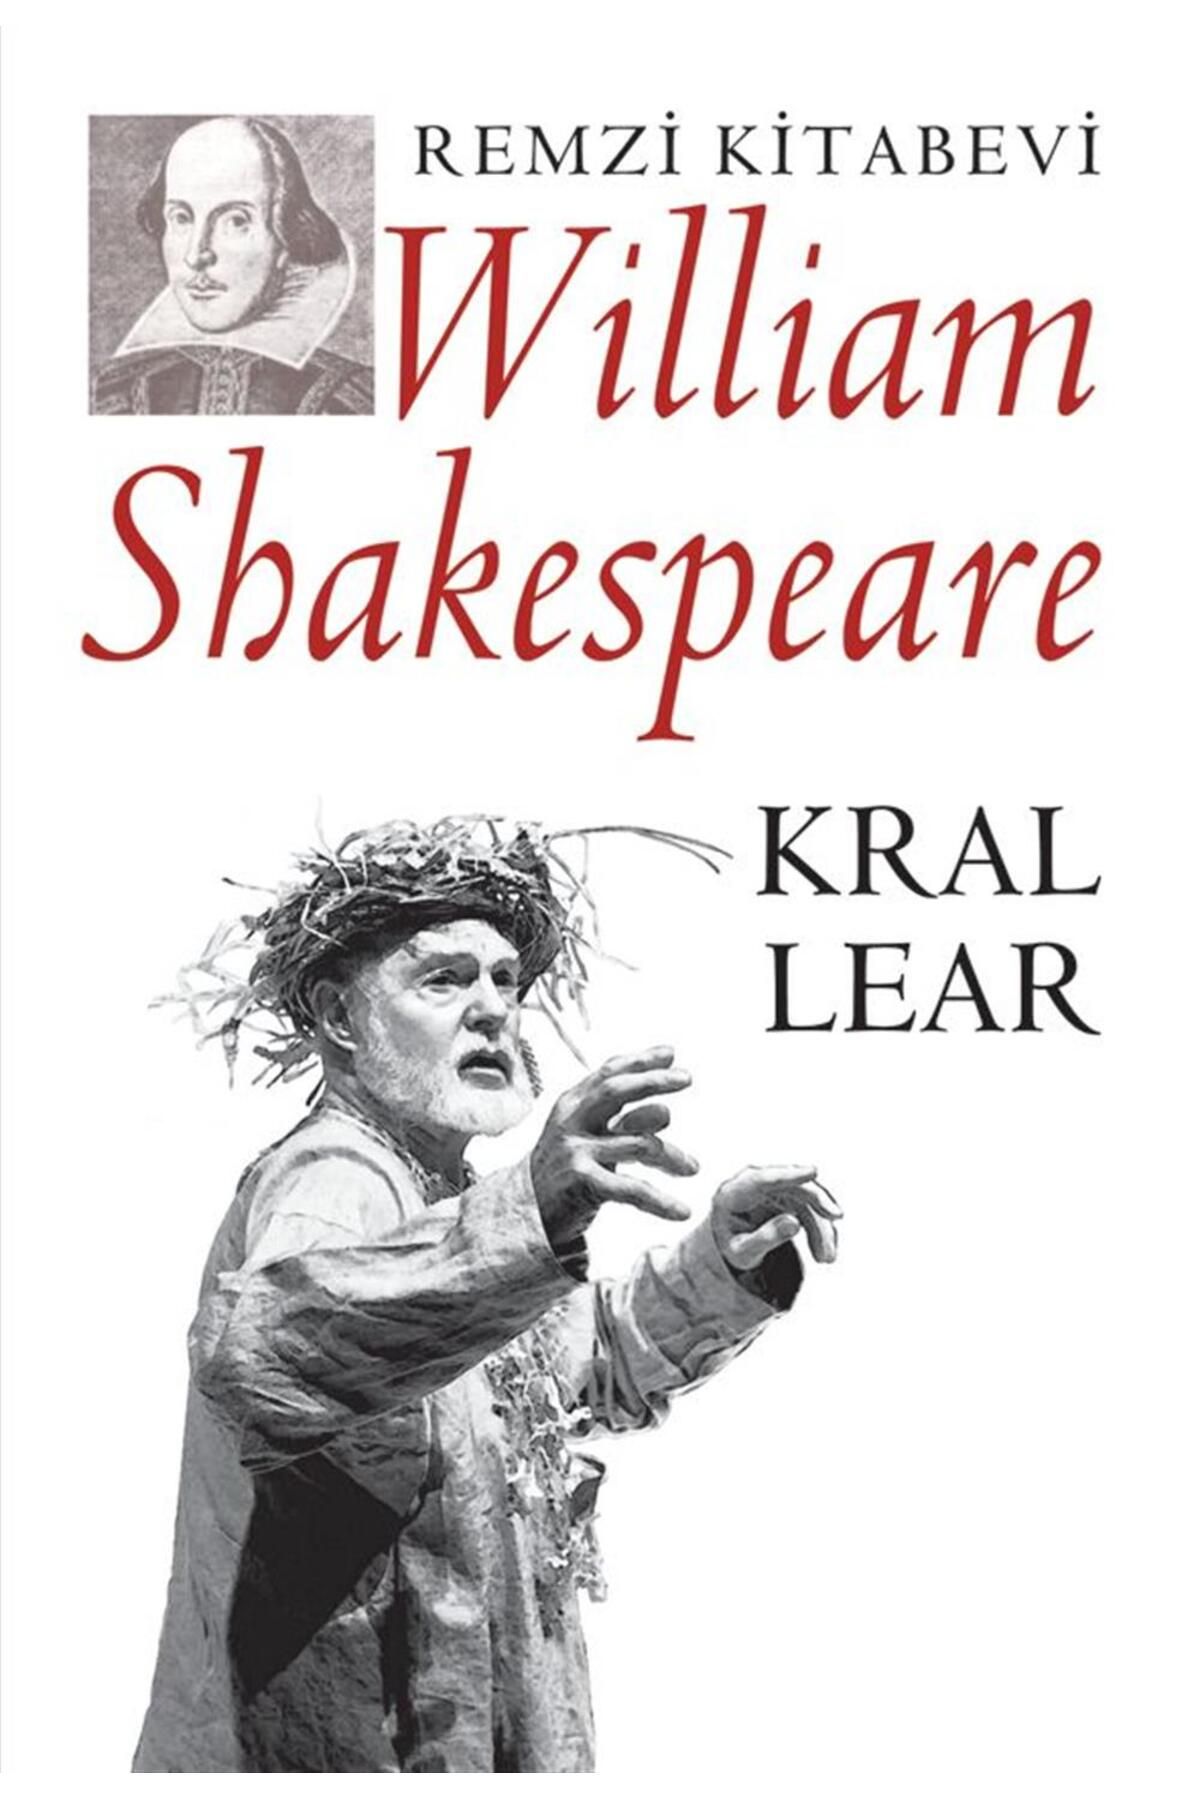 Remzi Kitabevi Kral Lear